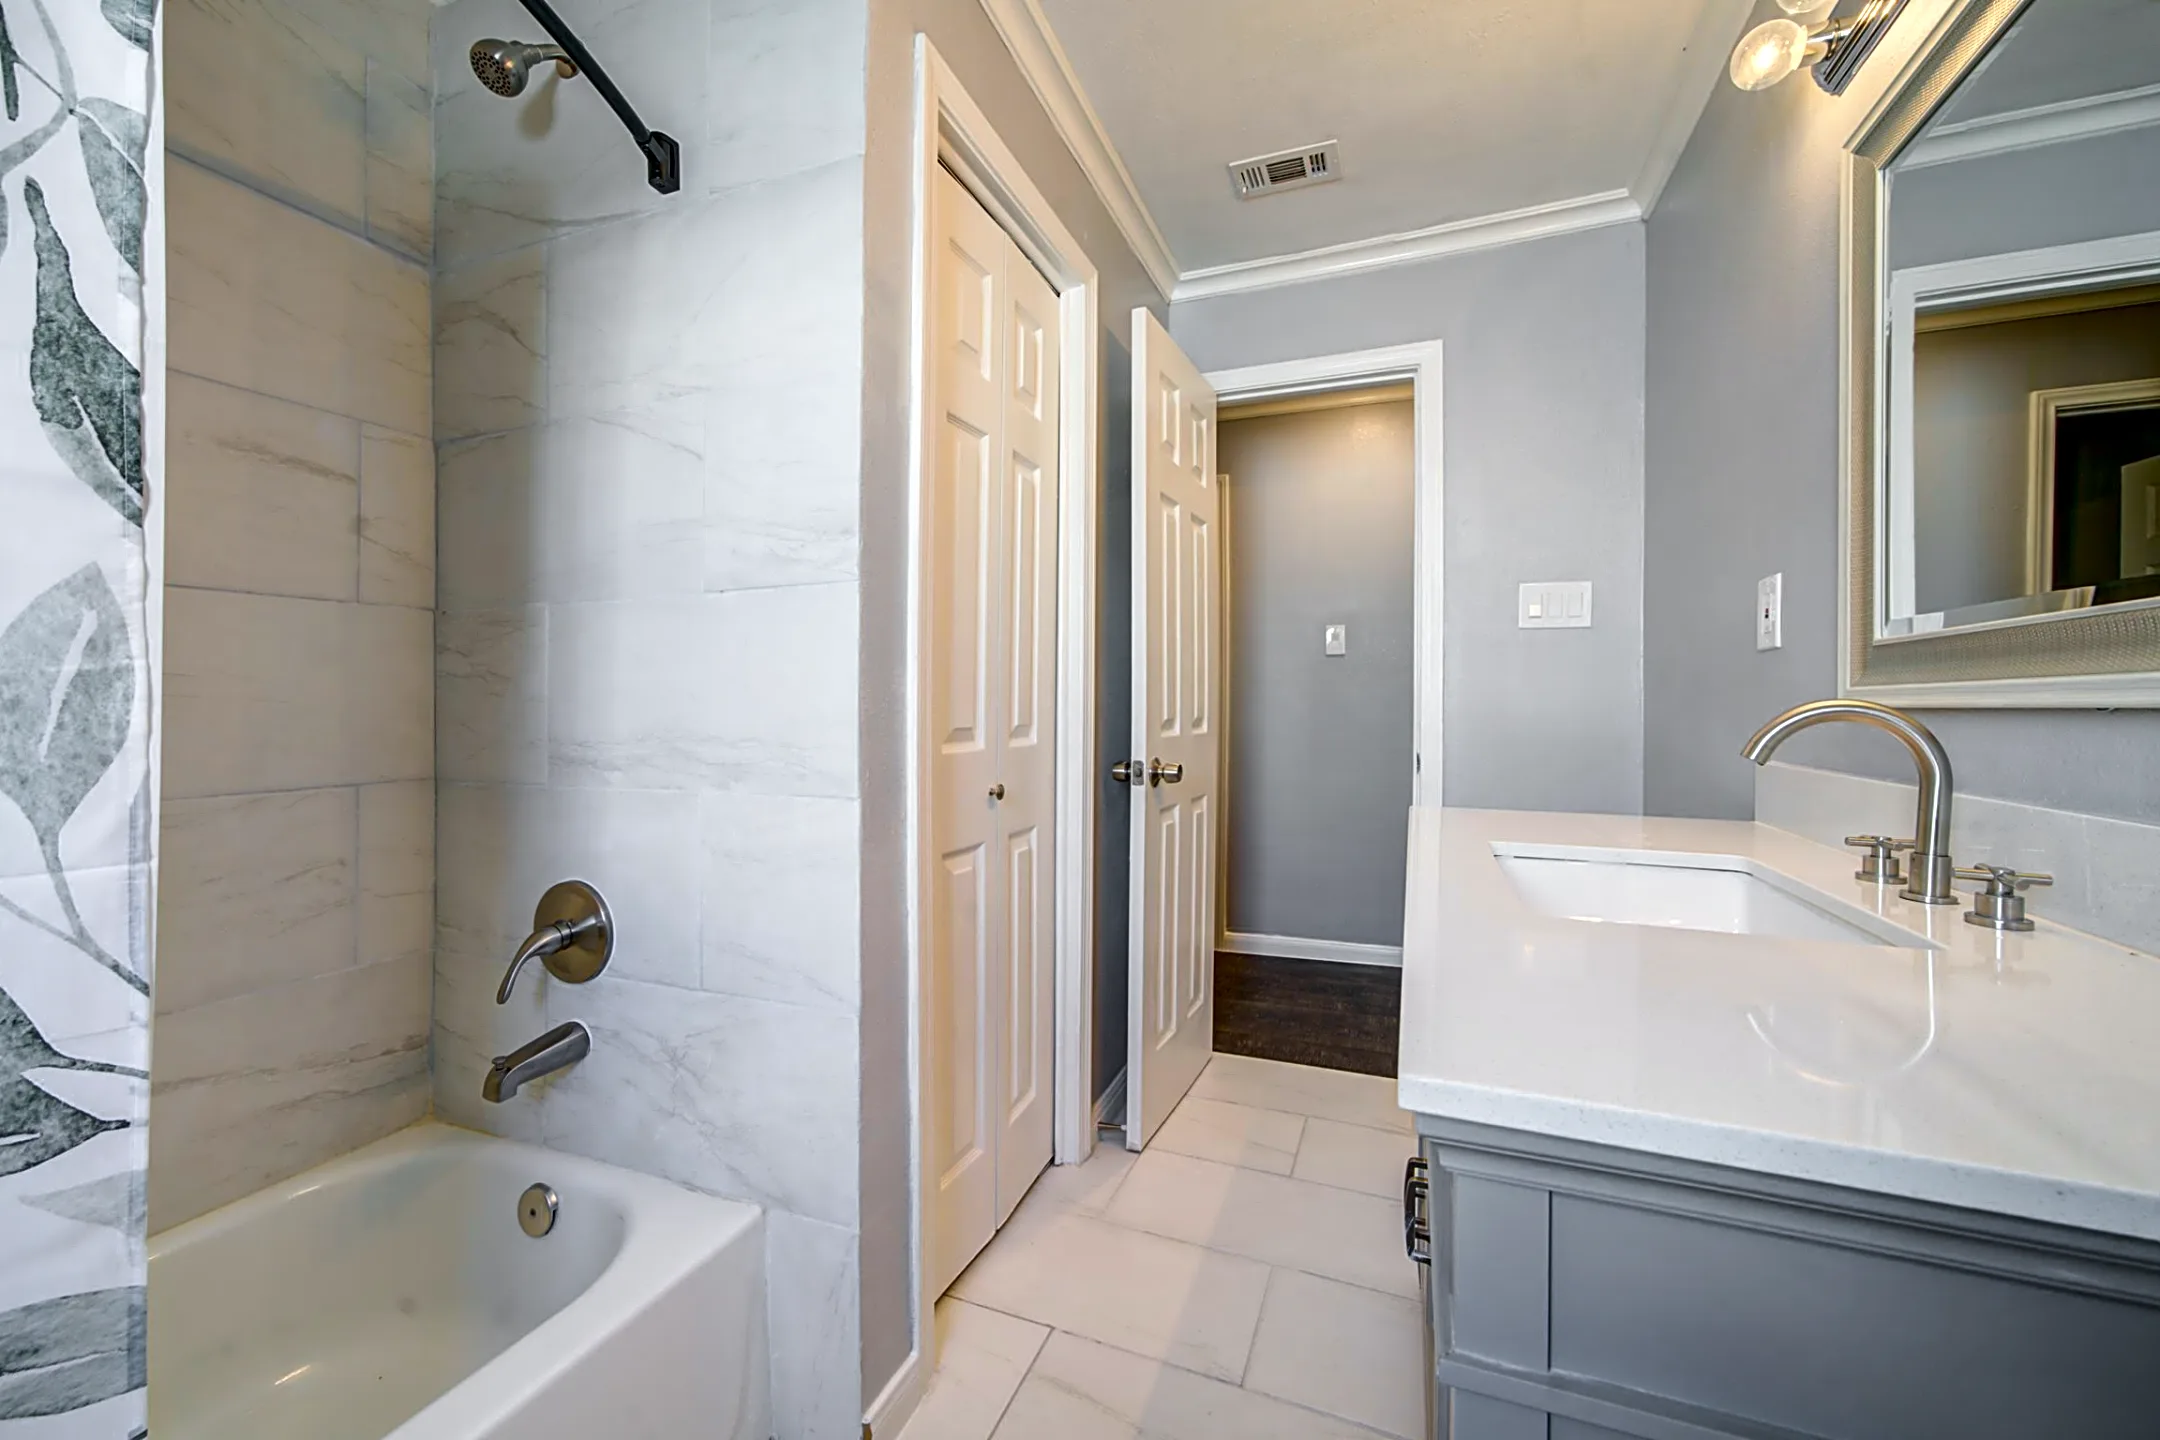 Bathroom - Room For Rent - Houston, TX